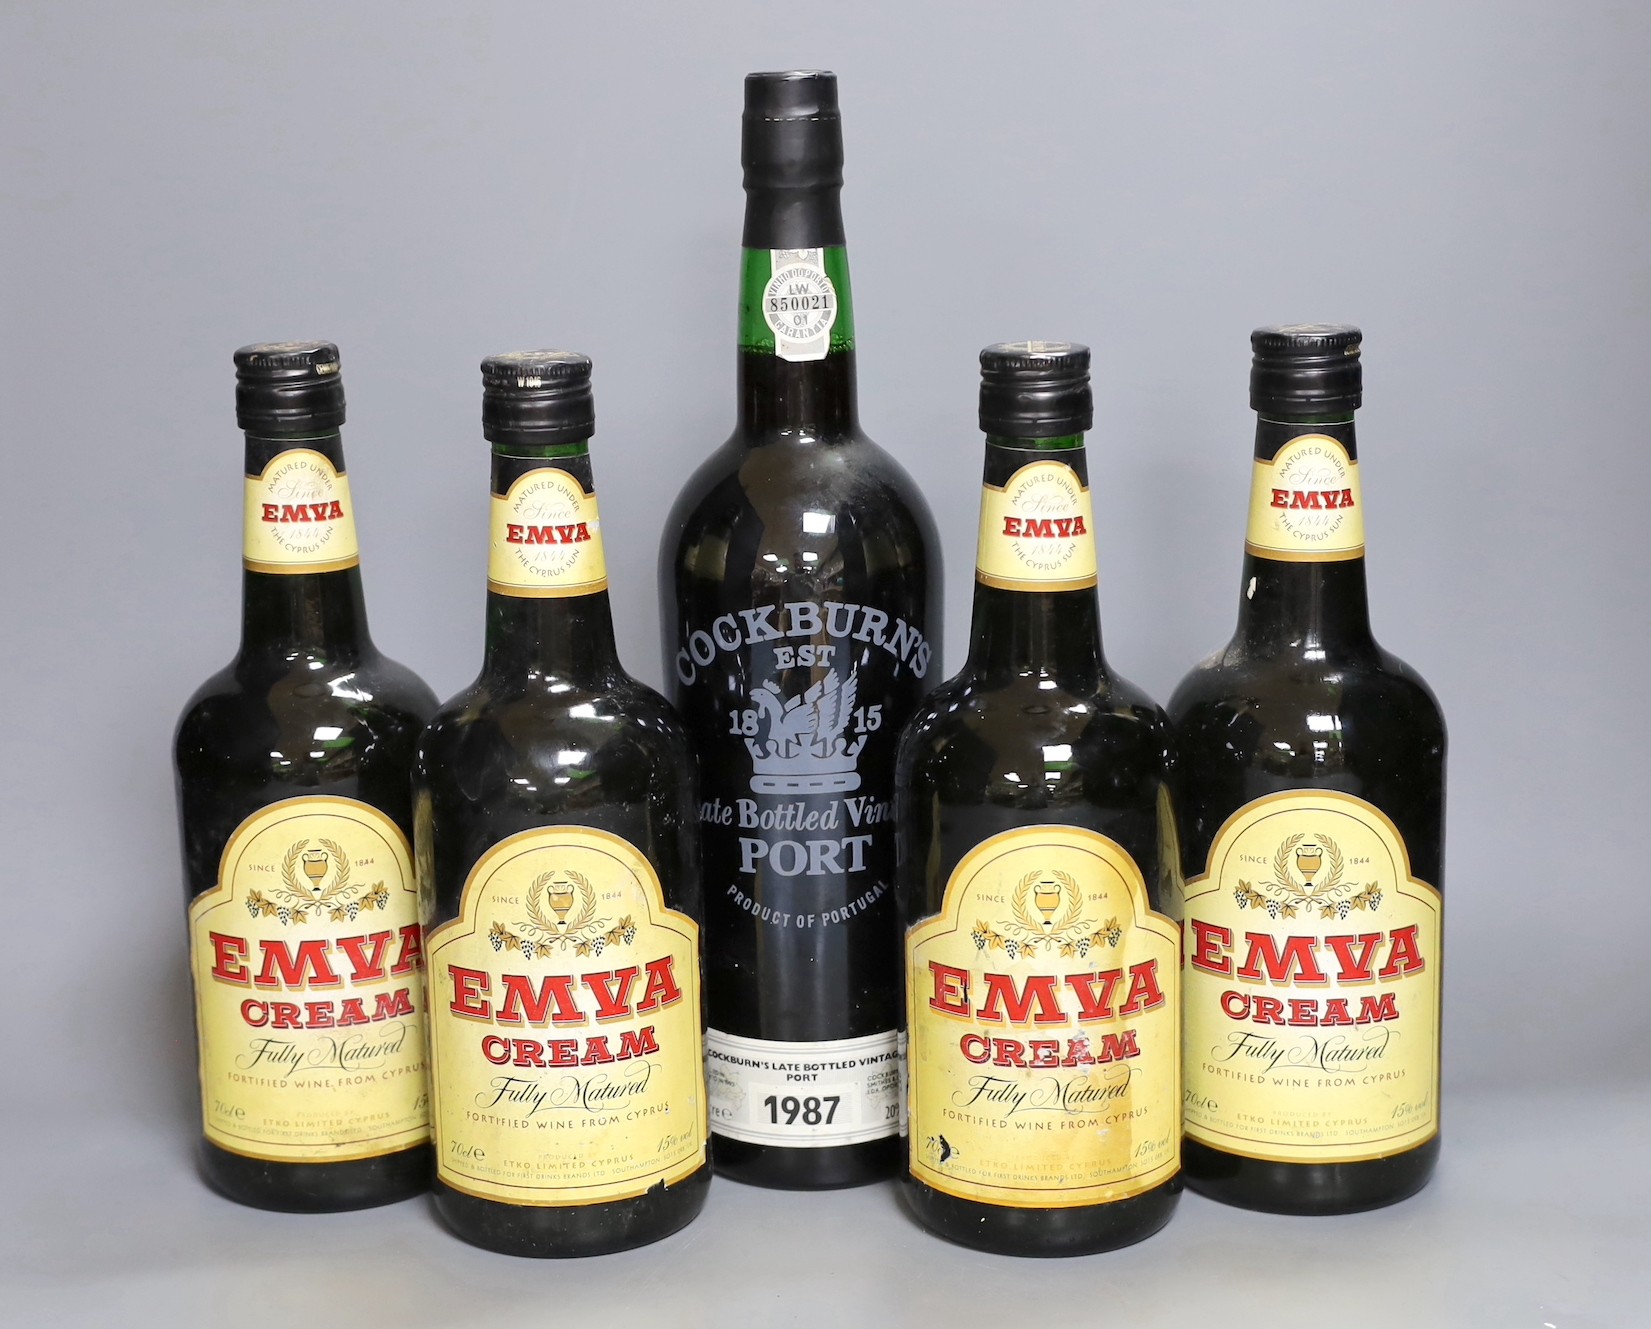 A bottle of Cockburns Vintage Port 1987 together with four bottles of Emva cream sherry